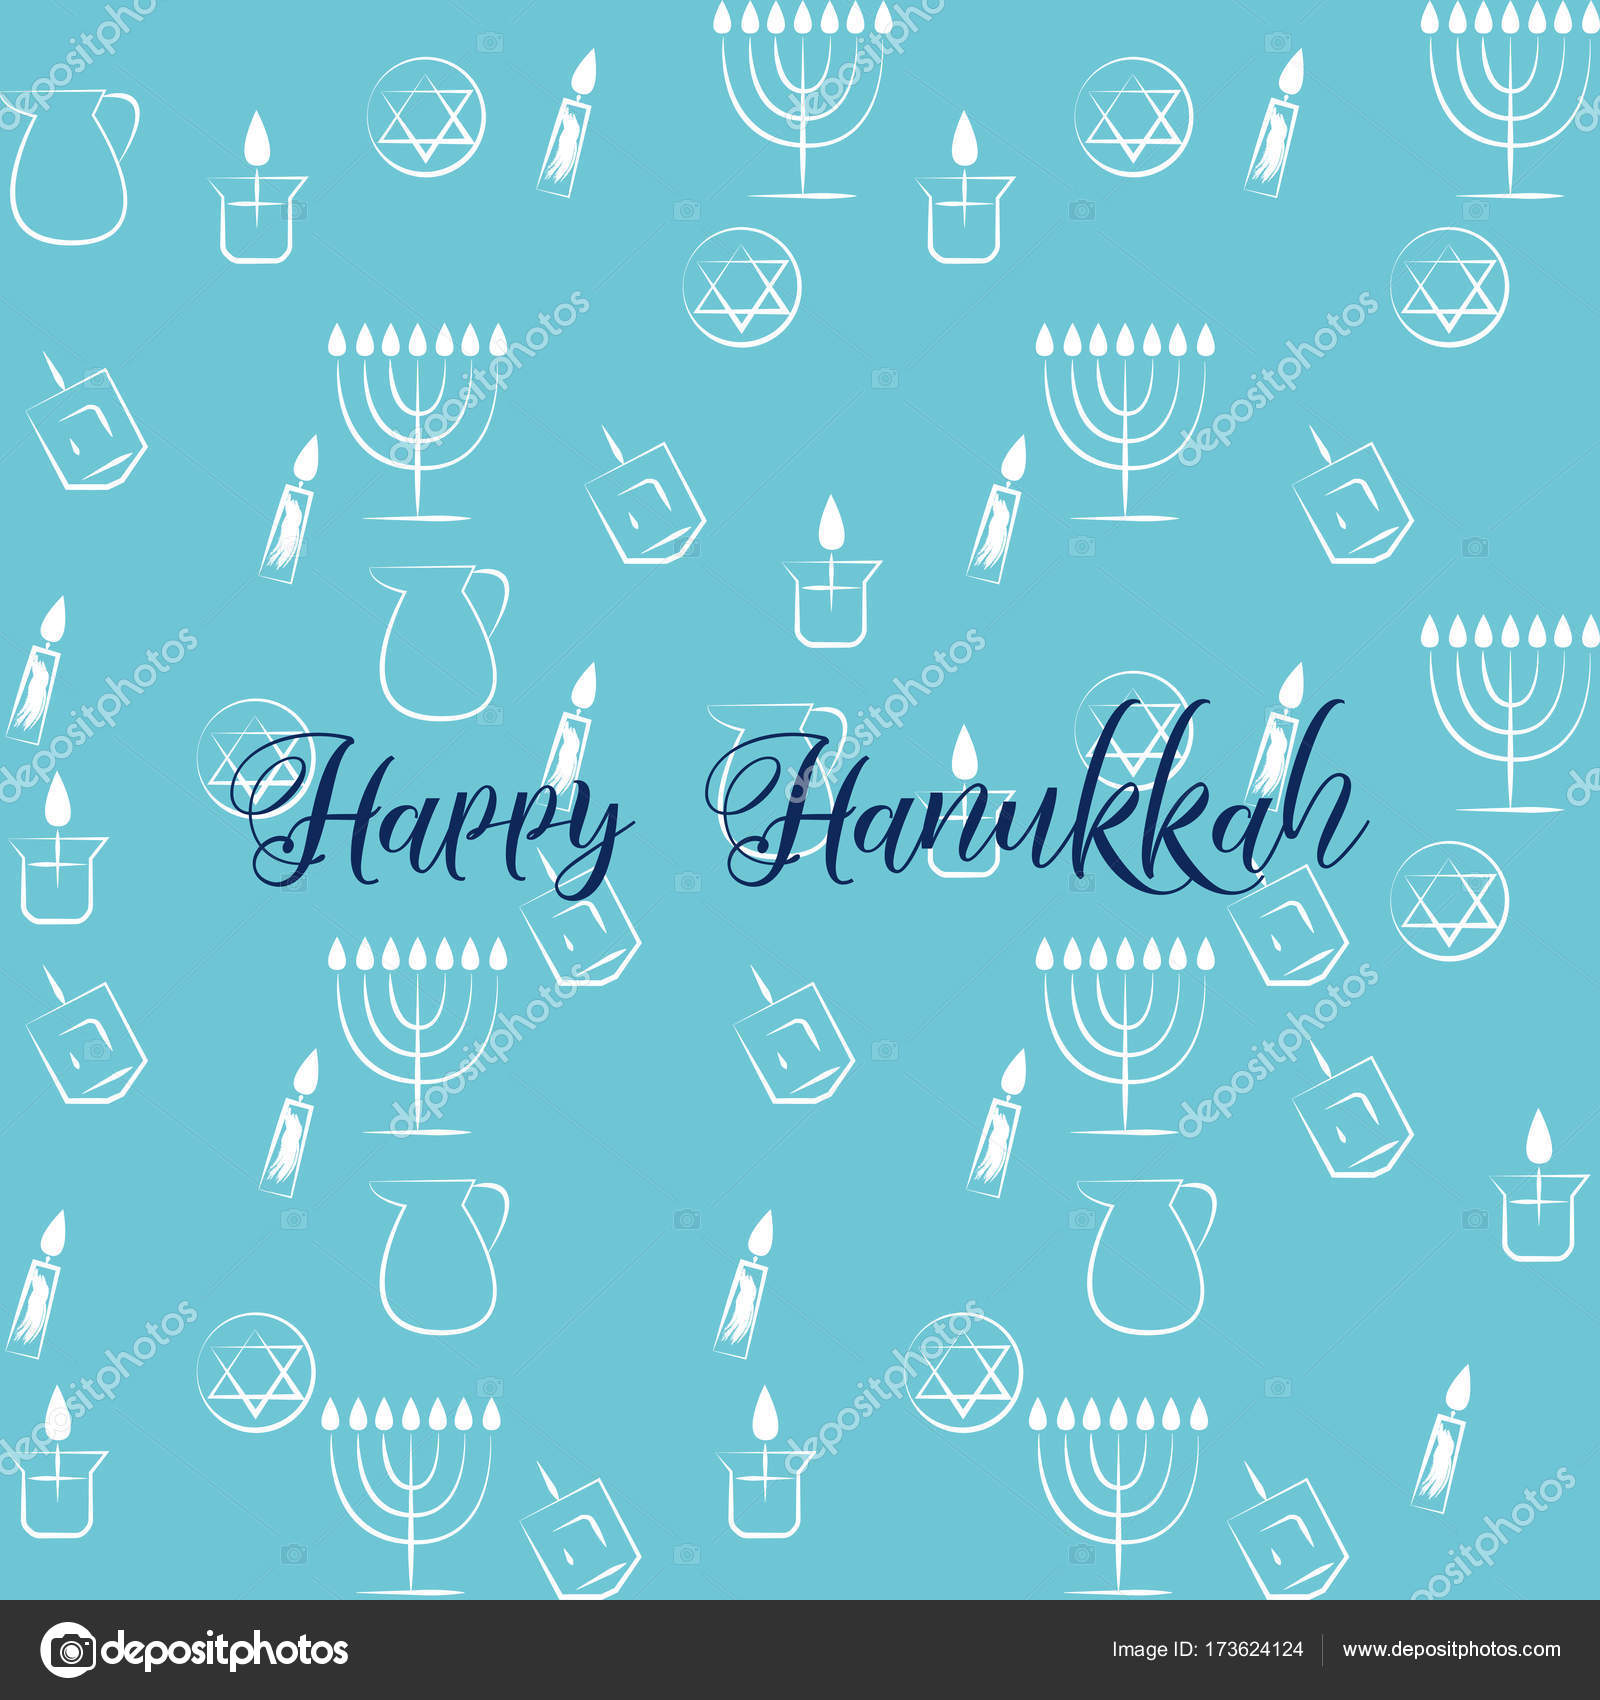 Hanukkah Traditional Jewish Holiday Symbols Set Vector Collection Of